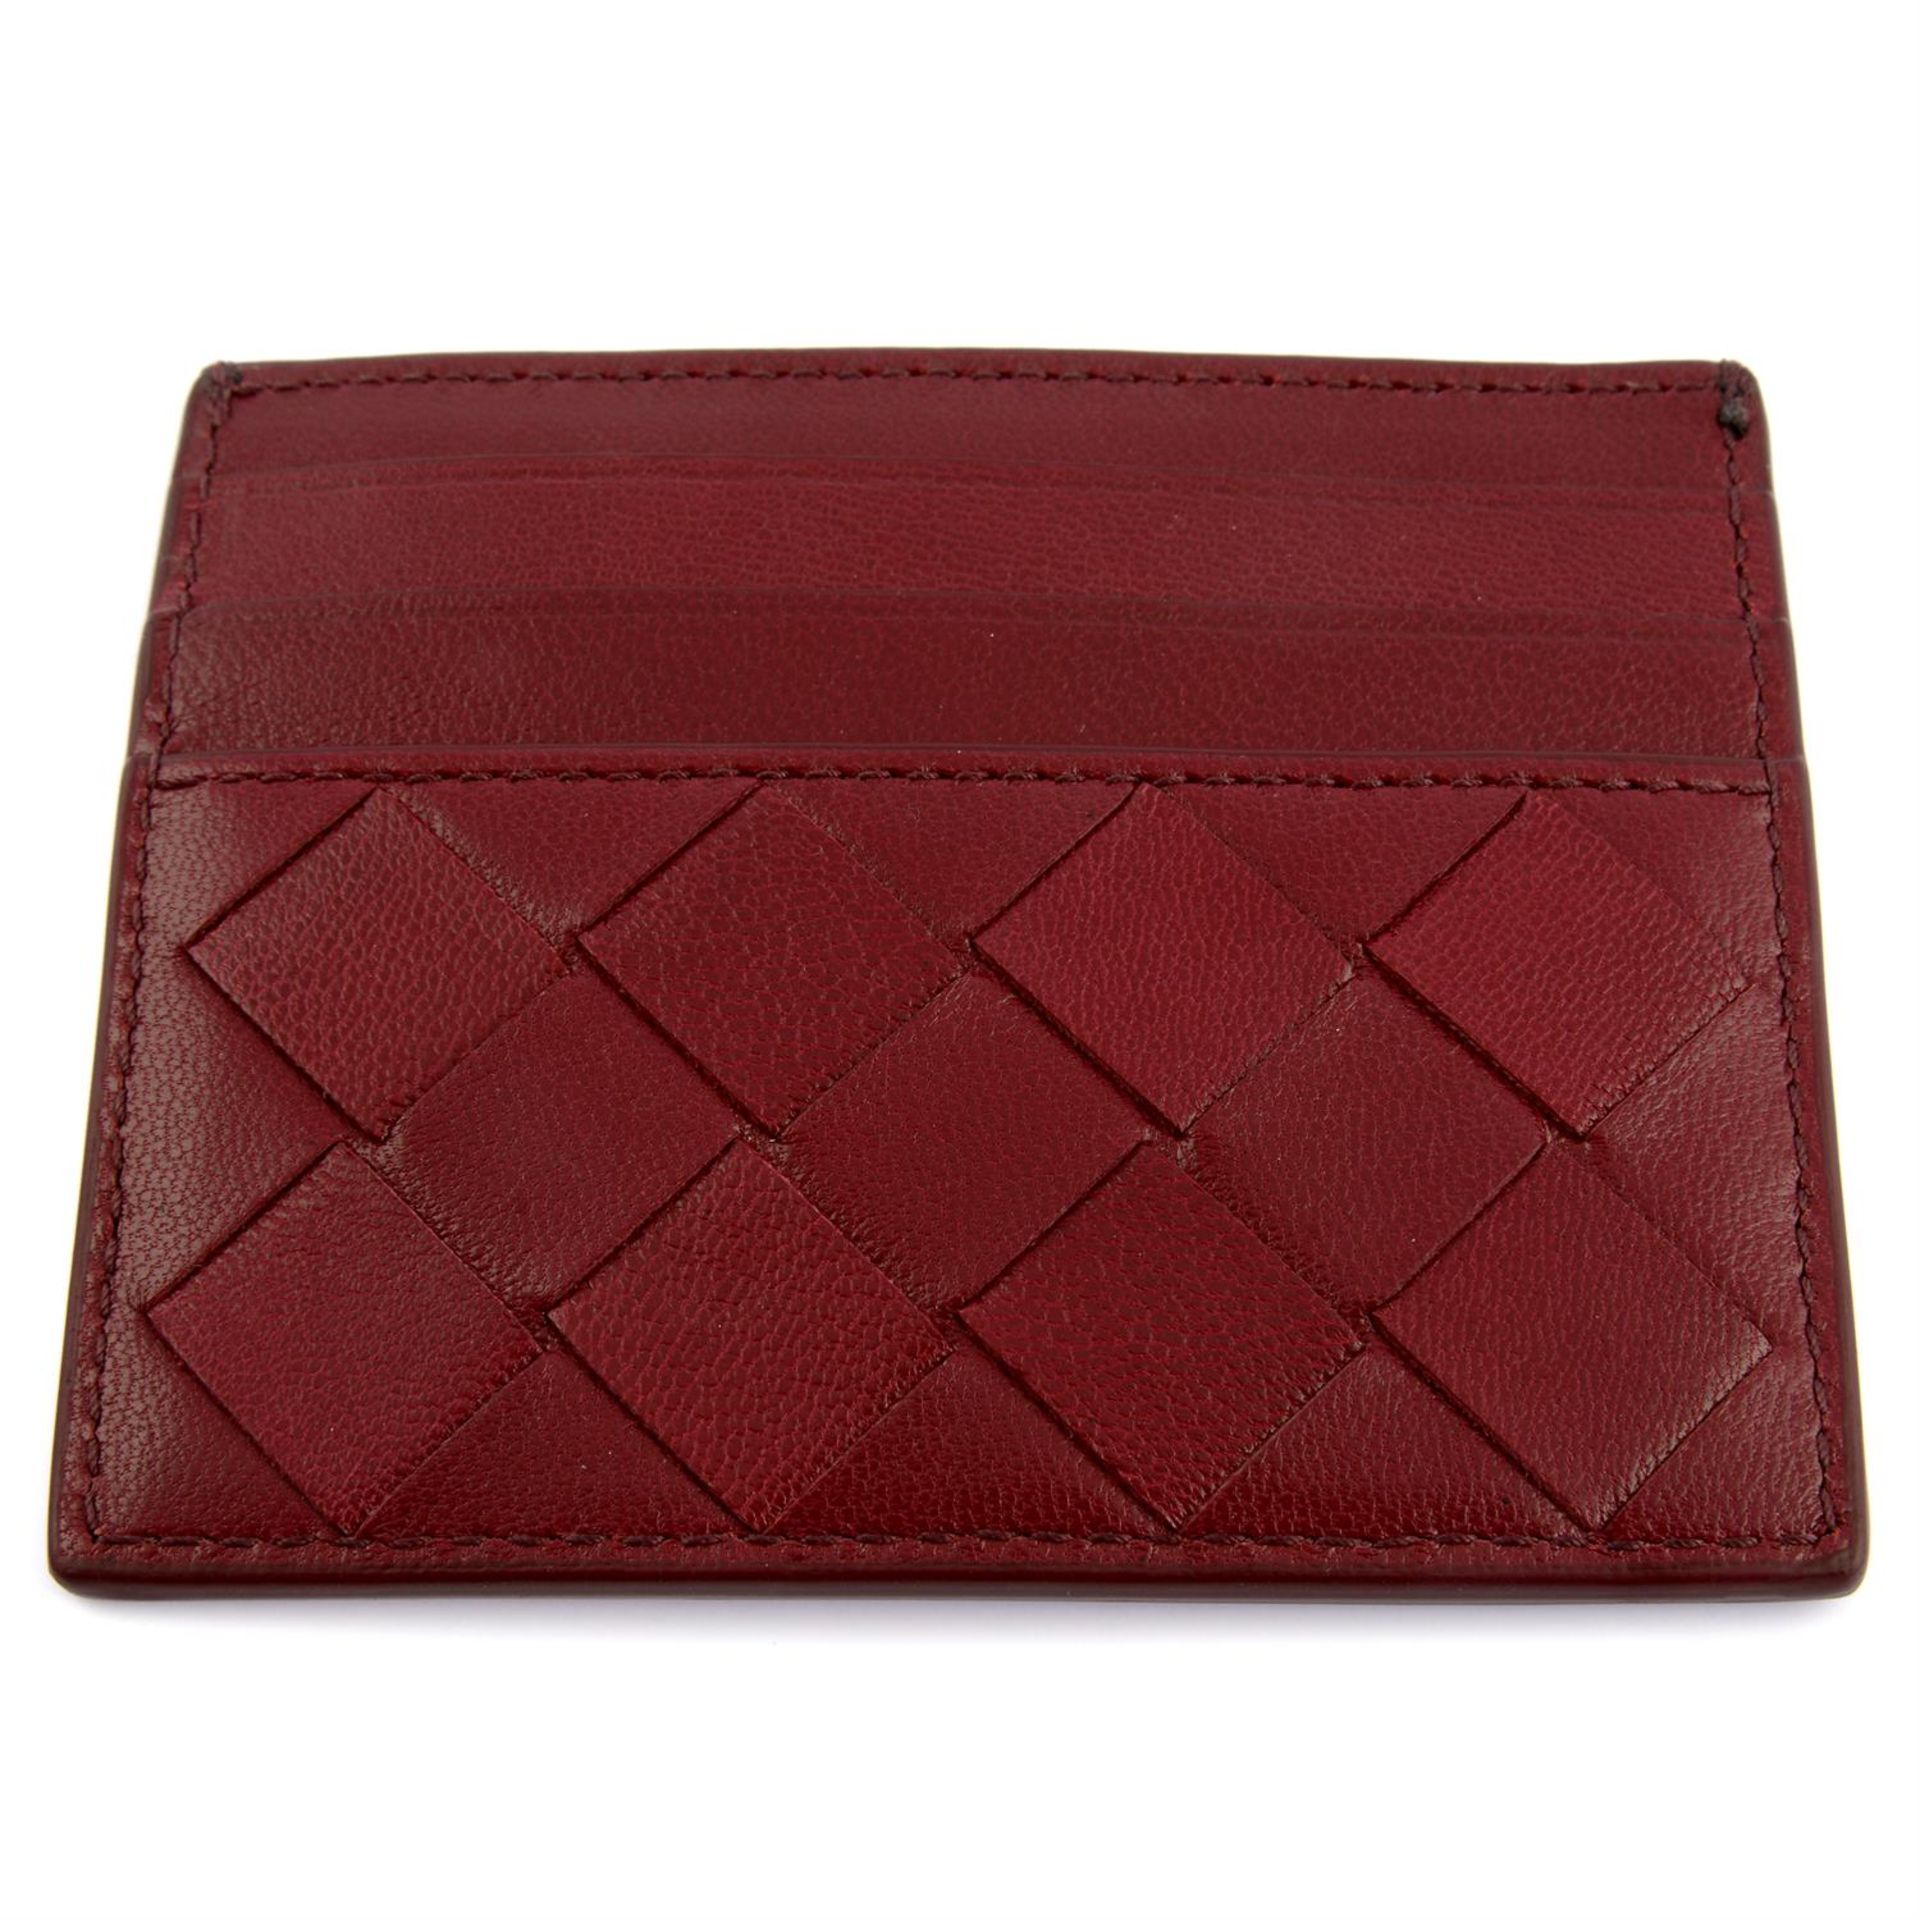 BOTTEGA VENETA - a burgundy leather card holder. - Image 2 of 3